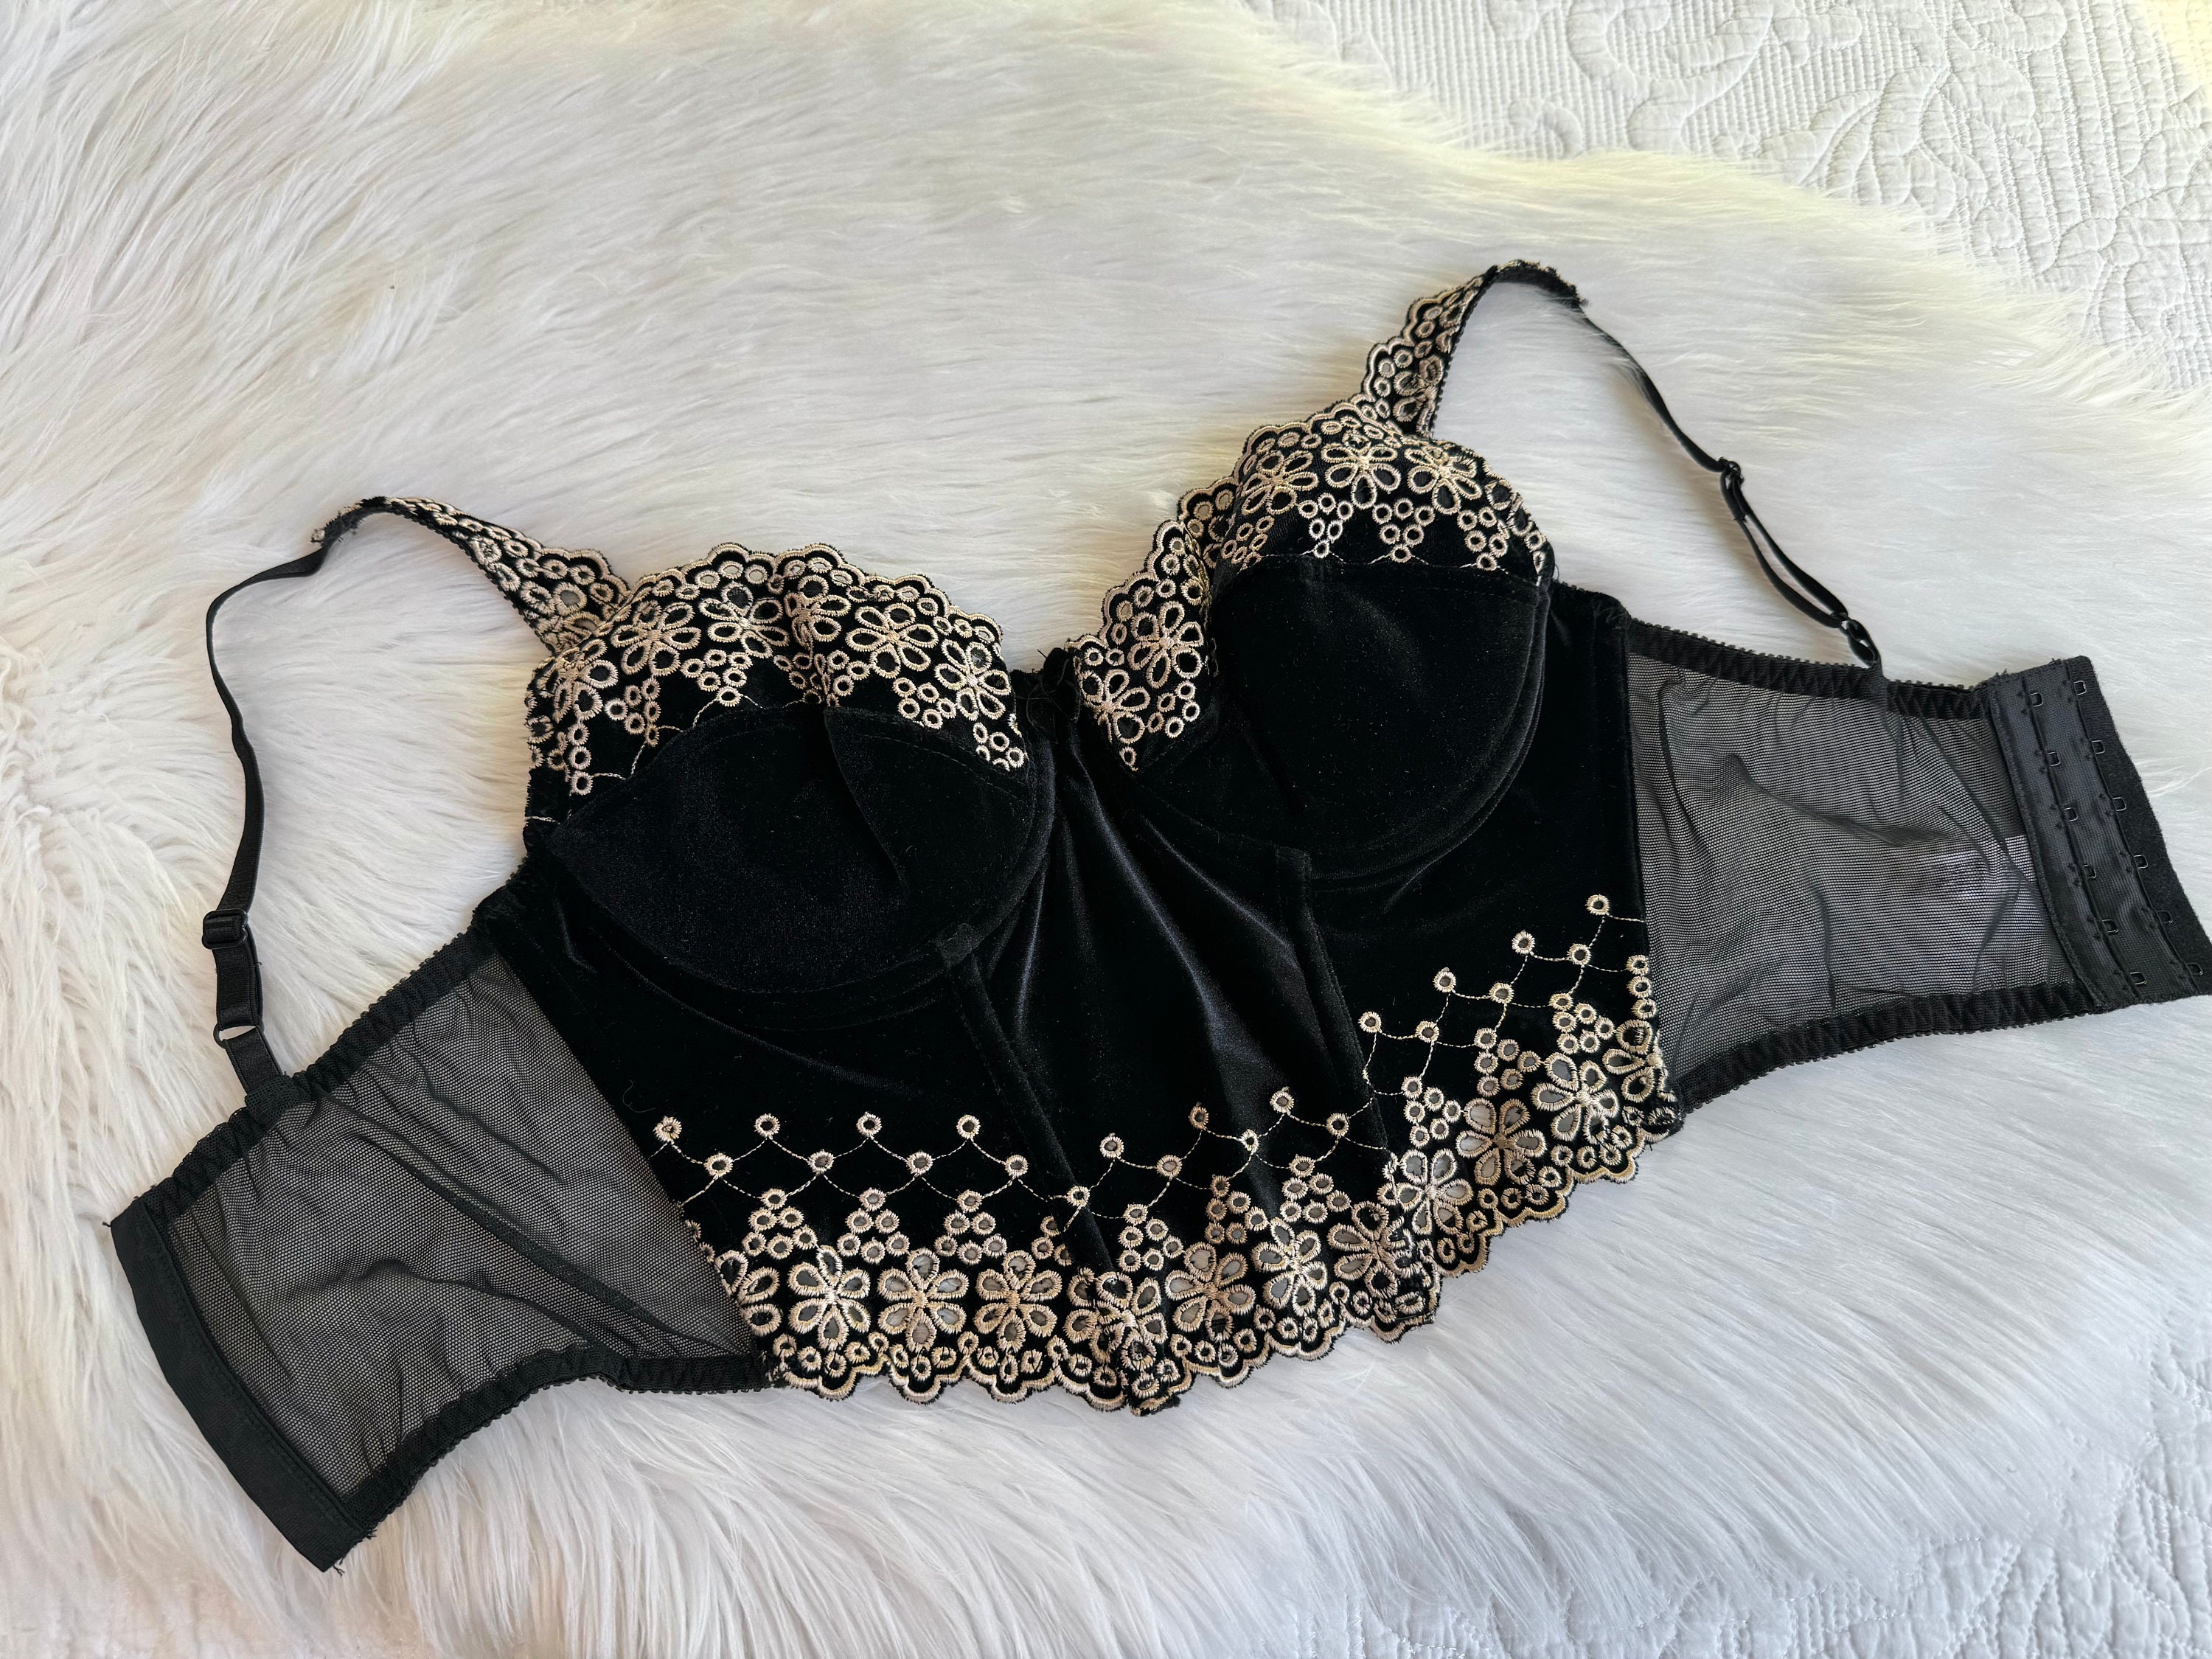 Victoria's Secret Black Velvet Rhinestone Bra 34A Size 34 A - $32 - From  Noelle